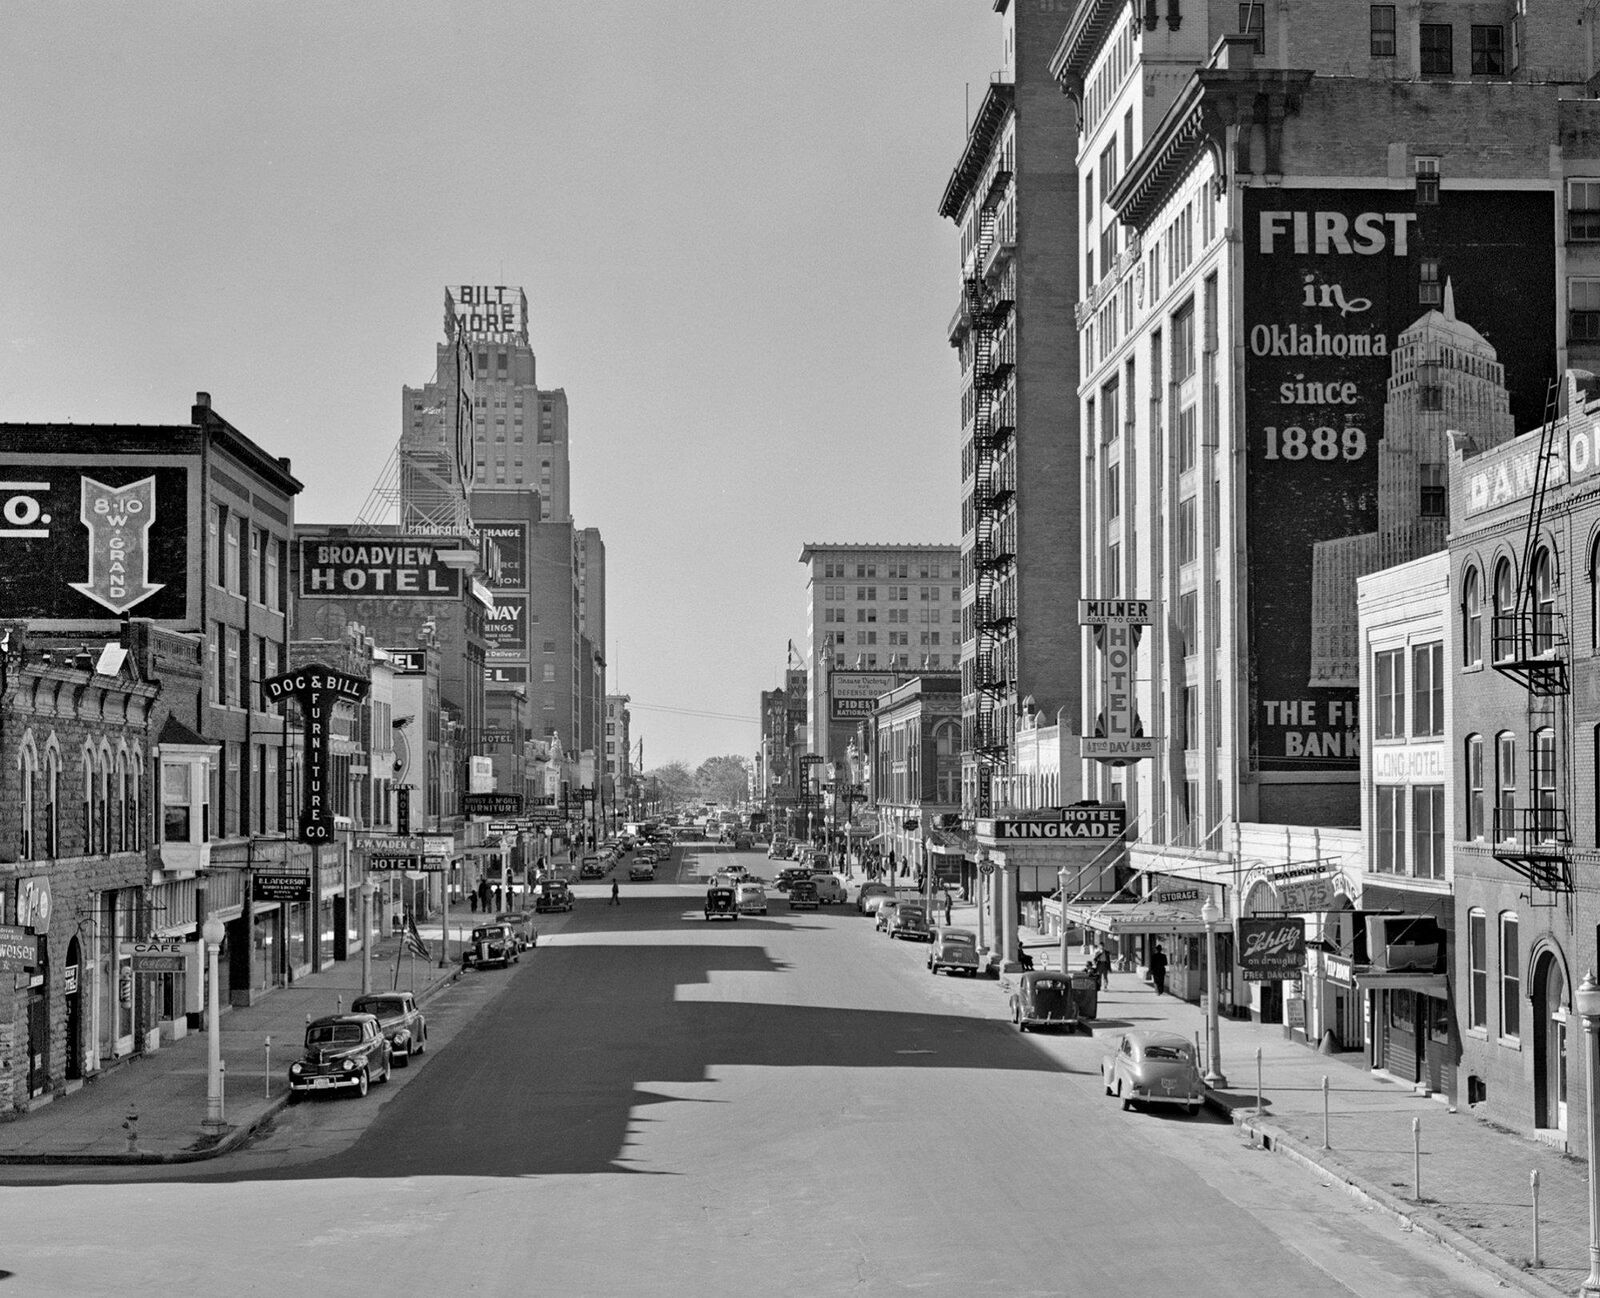 1942 OKLAHOLMA CITY Street Scene Photo (226-P)